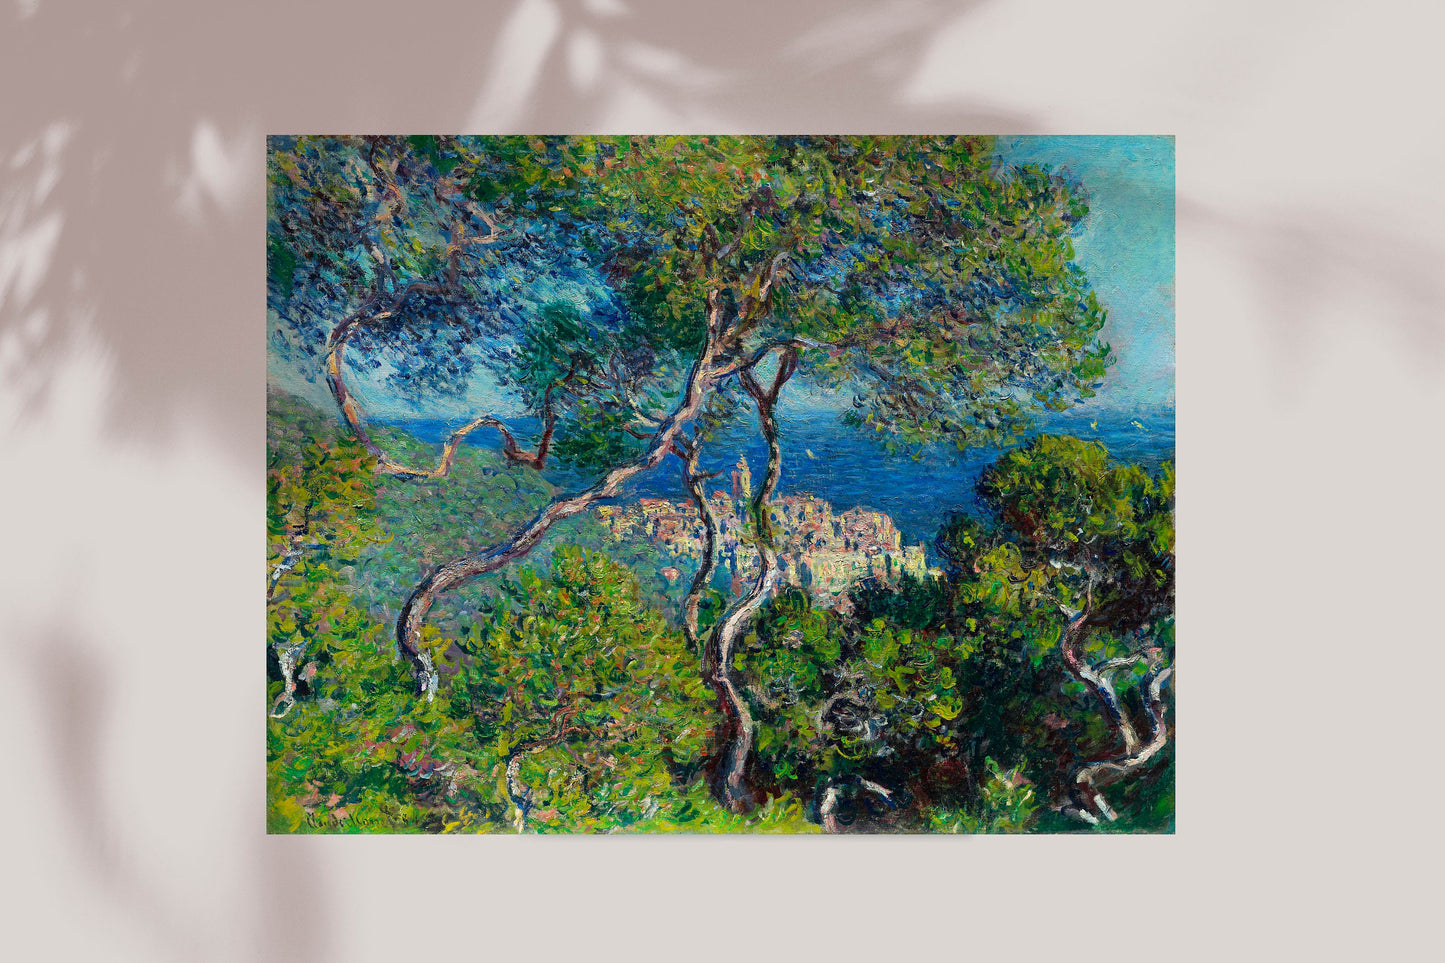 Bordighera (1884) by Claude Monet Art Poster Print Wall Hanging Decor